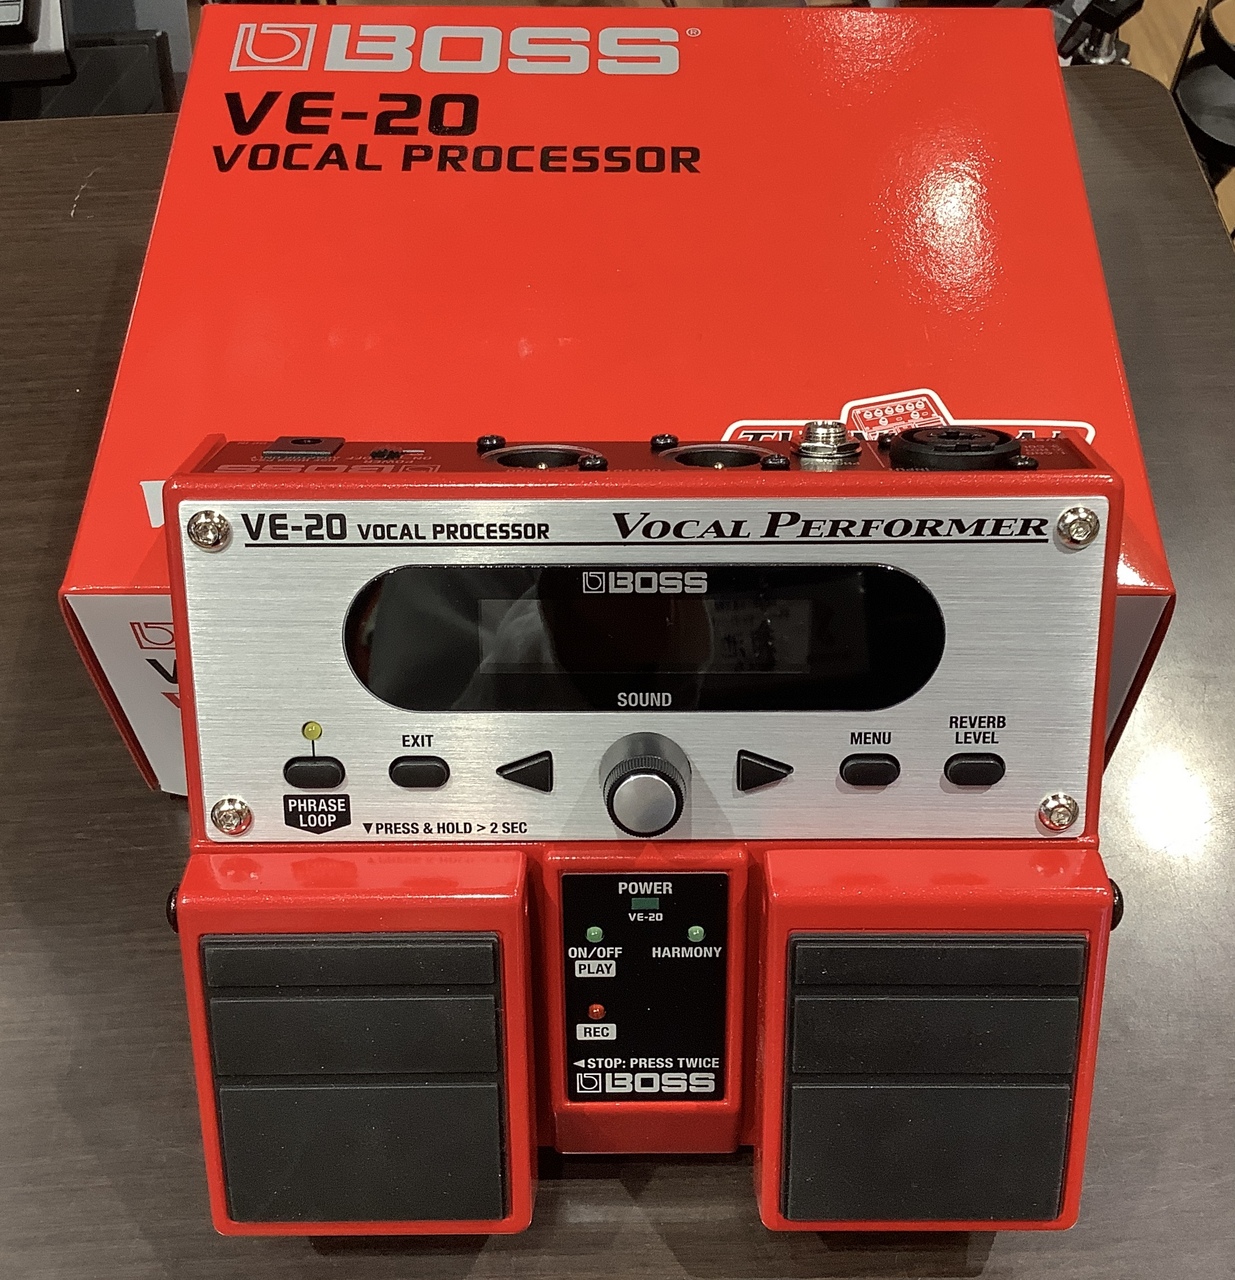 BOSS VE-20 VOCAL PROCESSOR 箱 説明書付き-